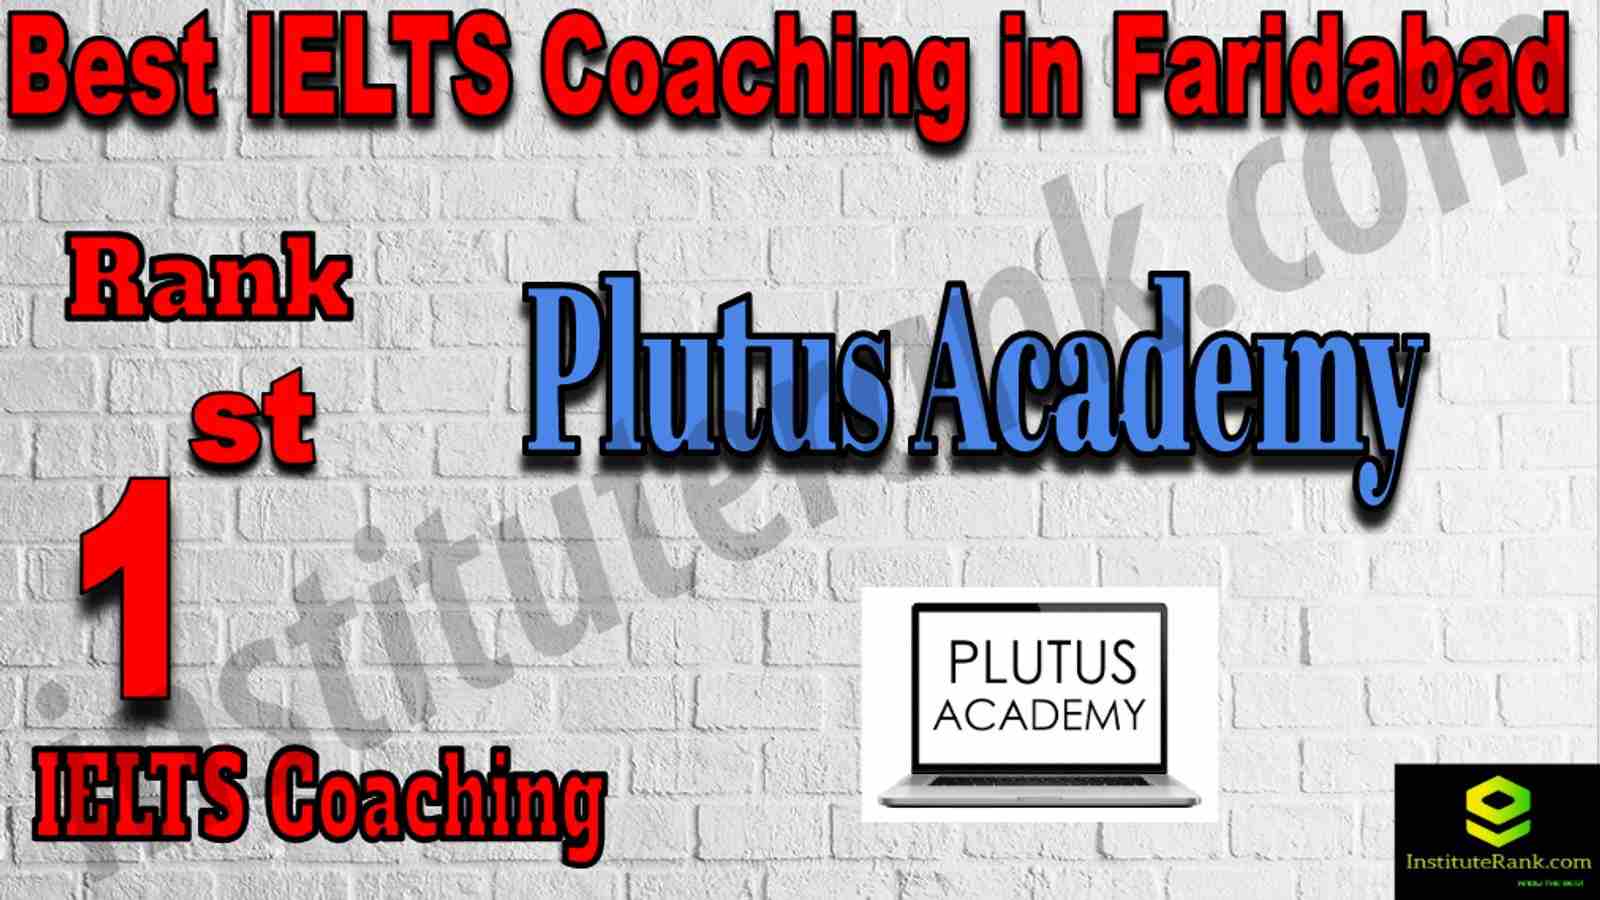 1st Best IELTS Coaching in Faridabad